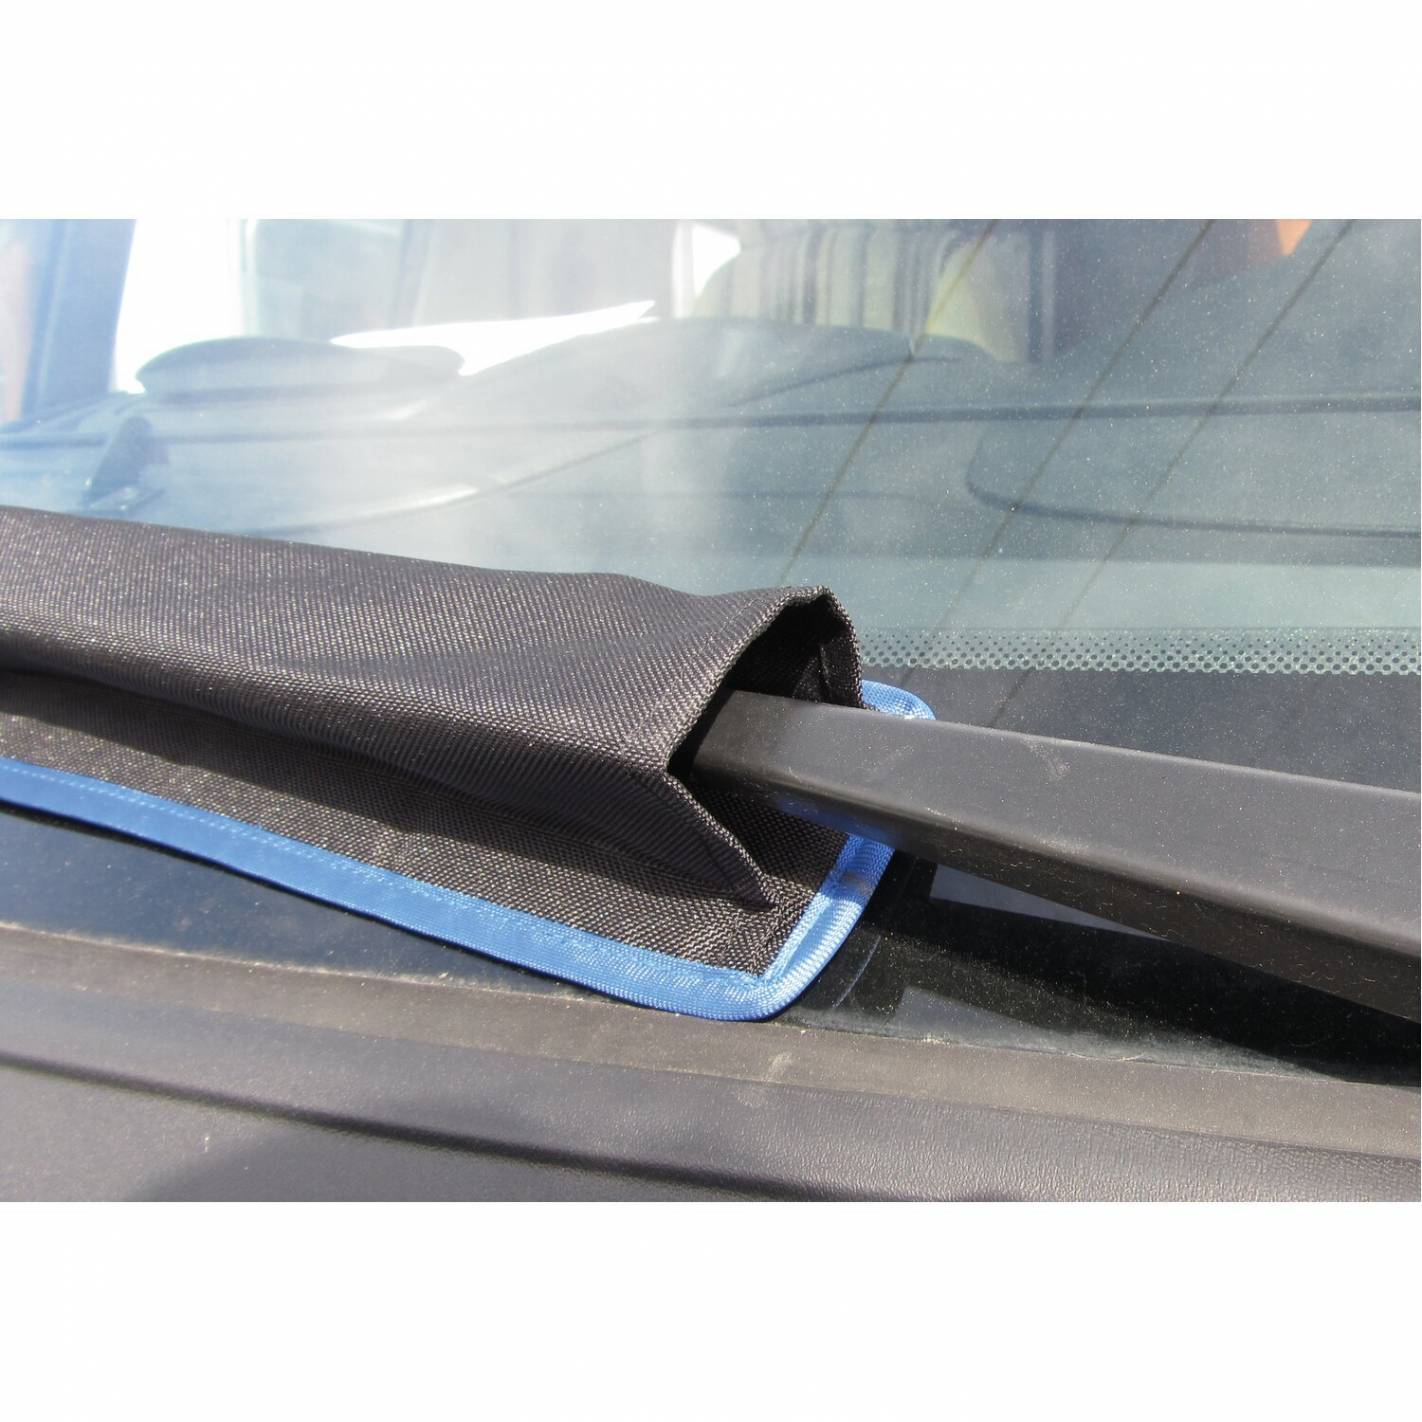 Protège balai essuie-glace pour véhicule - Just4Camper Optima RG-1Q11024